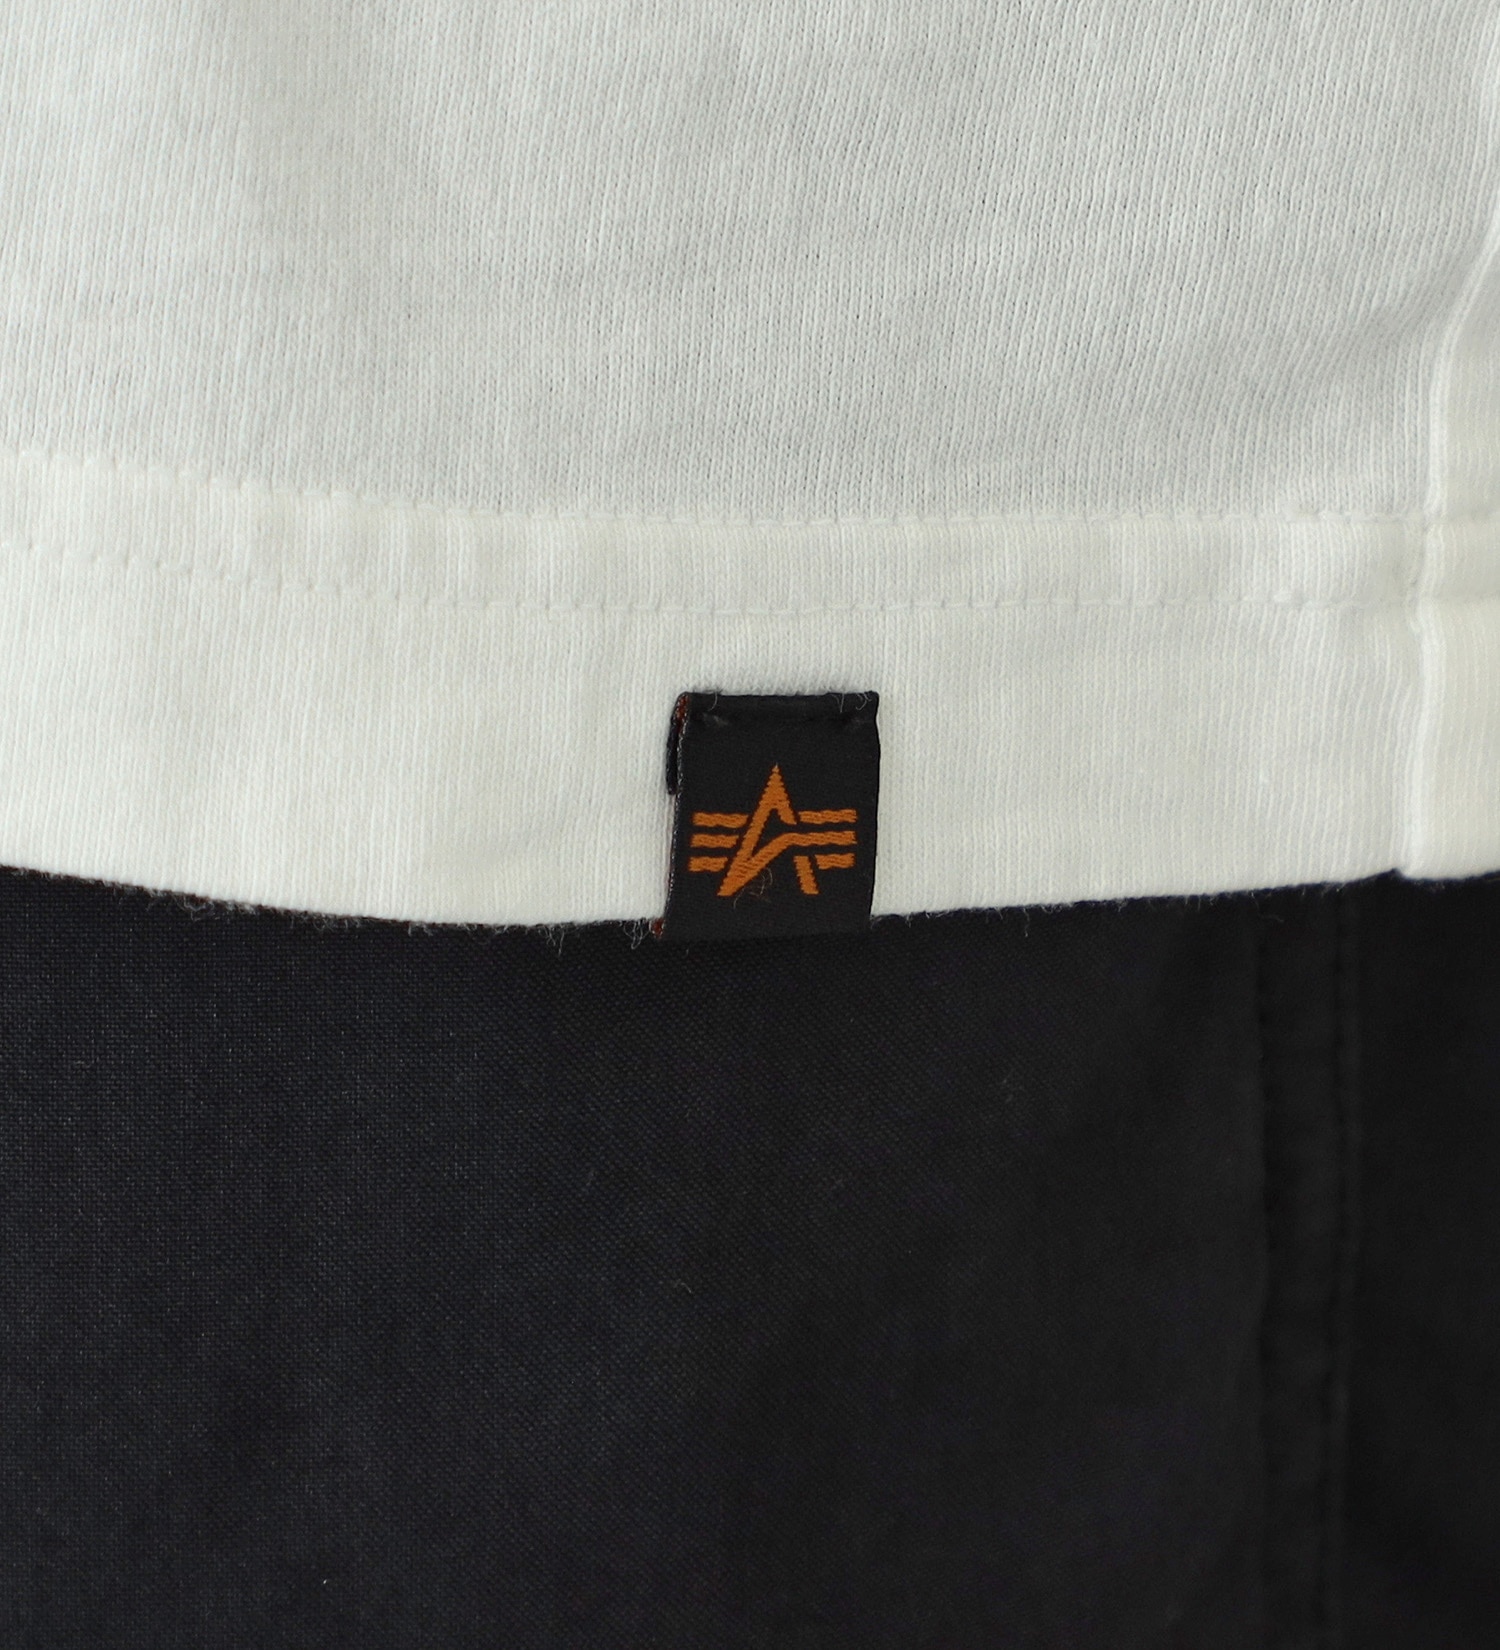 ALPHA(アルファ)の【GW SALE】POPEYE(TM)xALPHA バックプリントTシャツ 長袖 (ブルータス)|トップス/Tシャツ/カットソー/メンズ|ホワイト